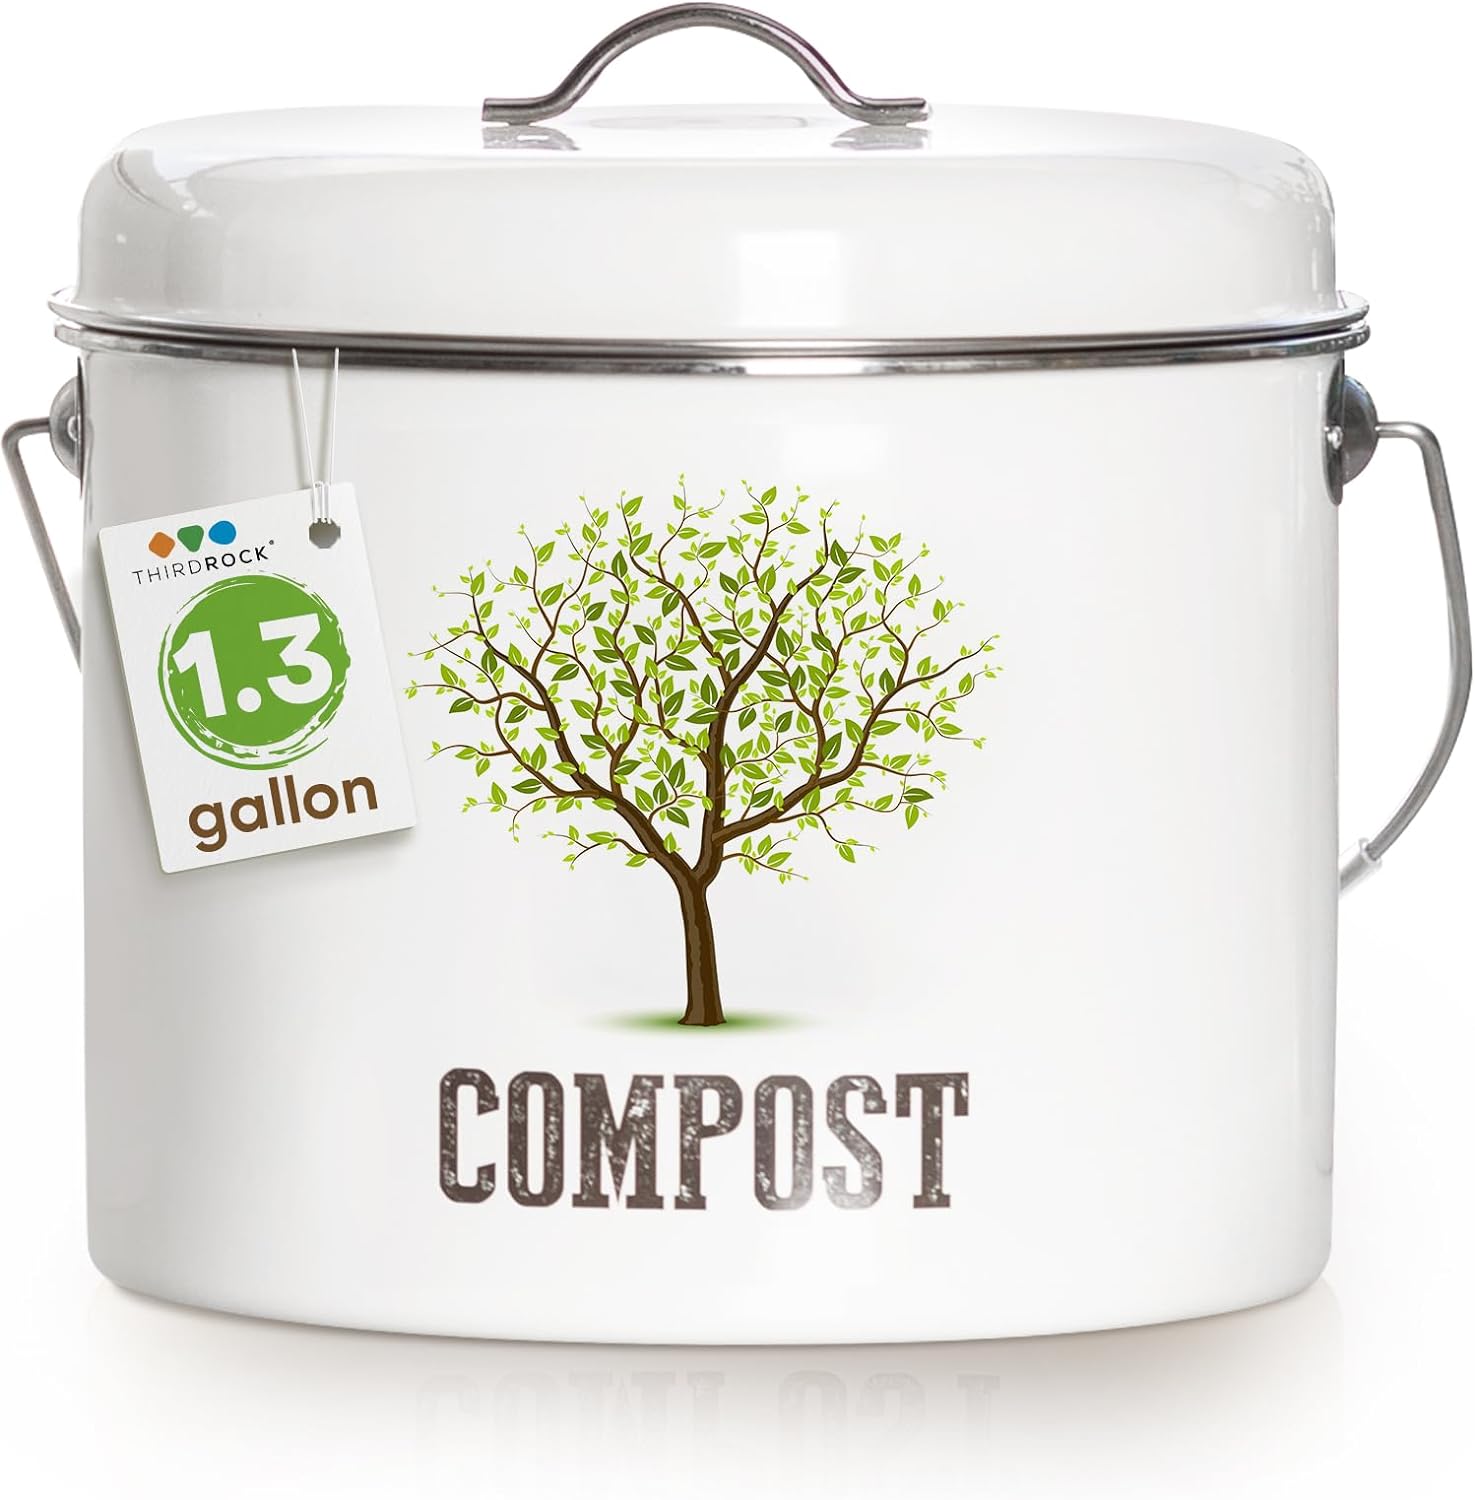 third rock kitchen compost bin review